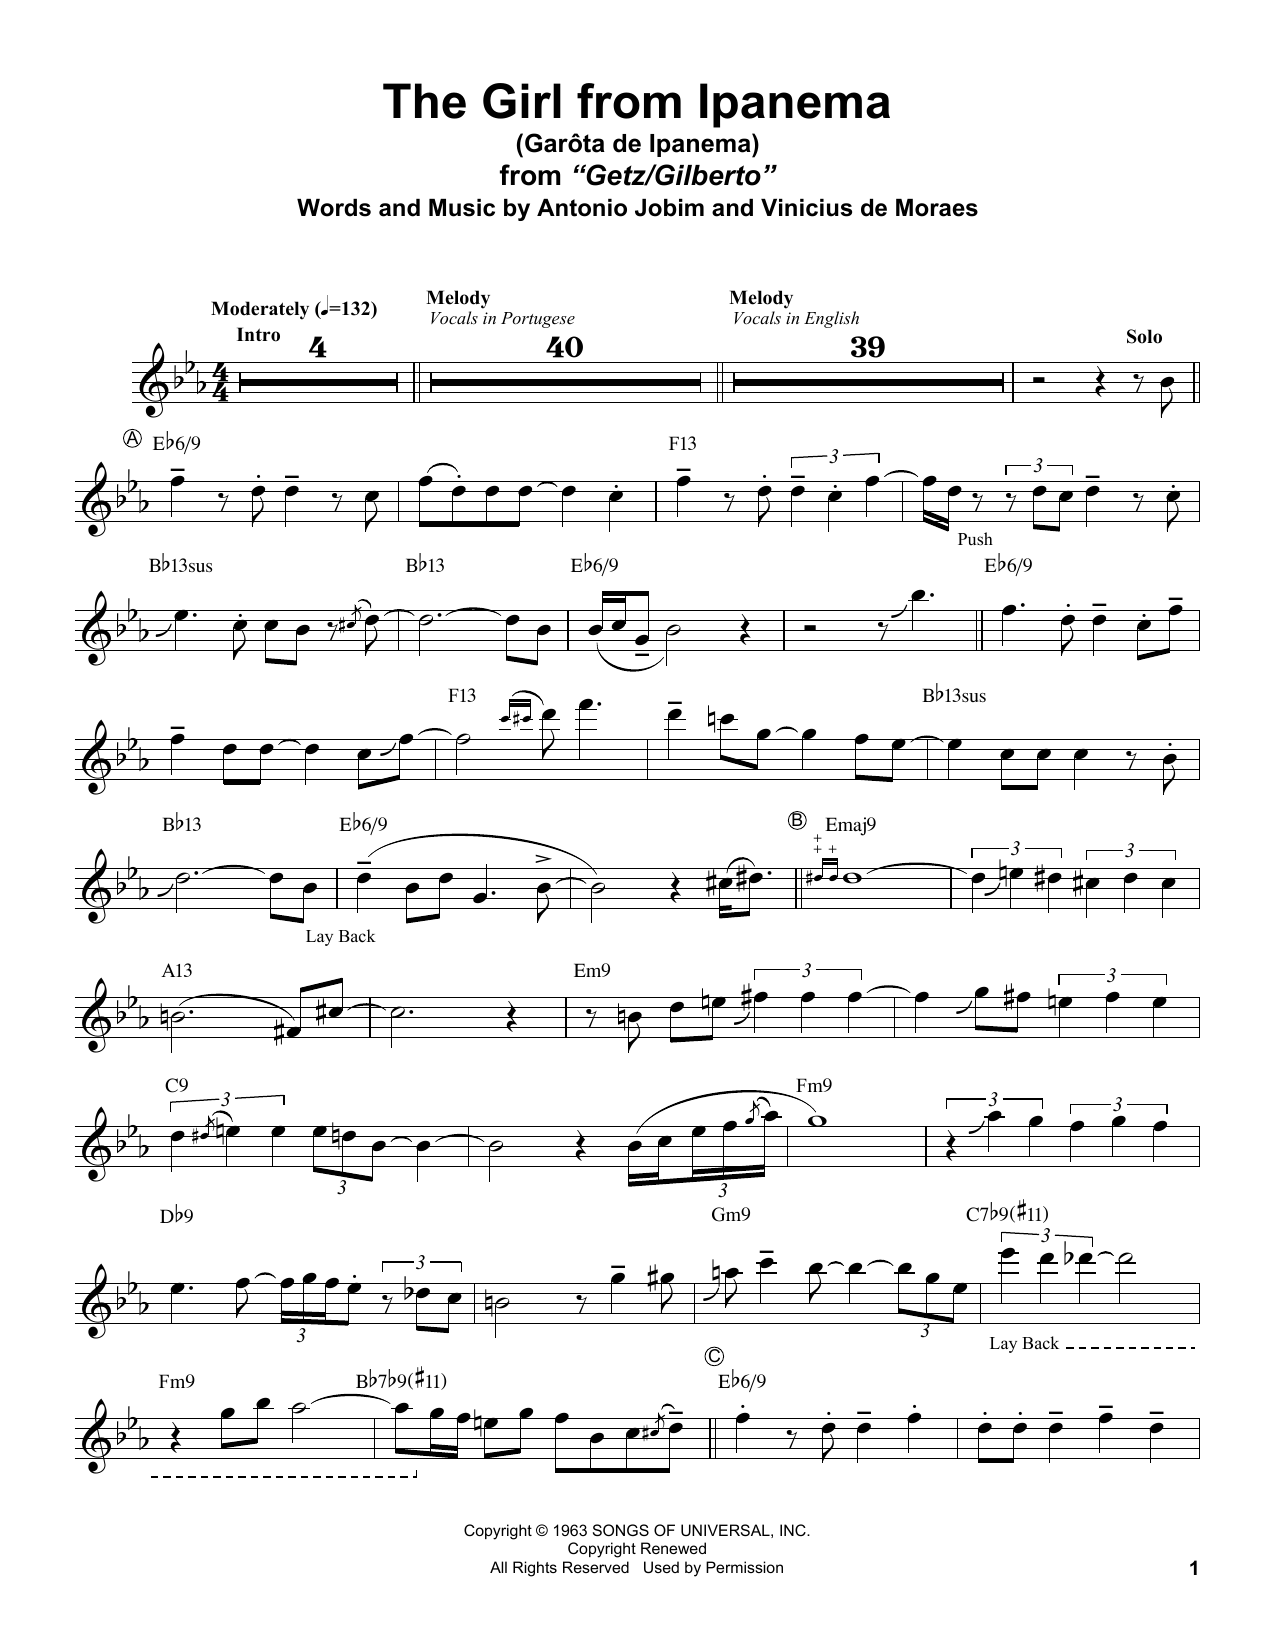 Download Stan Getz Garota De Ipanema Sheet Music and learn how to play Alto Sax Transcription PDF digital score in minutes